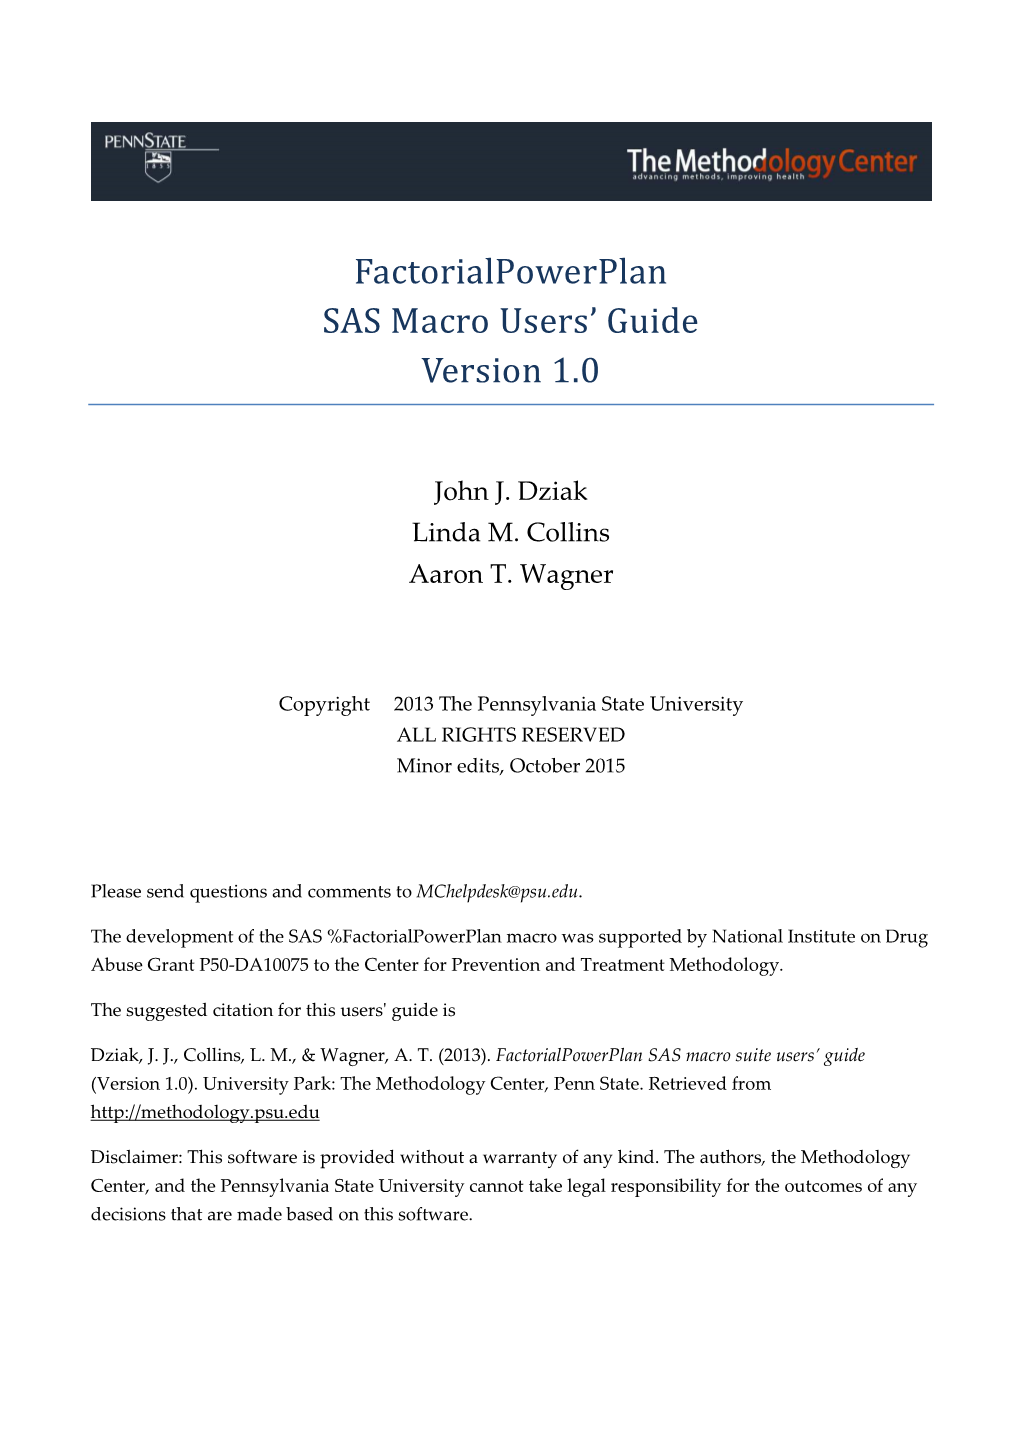 Factorial Power Plan Macro Users' Guide